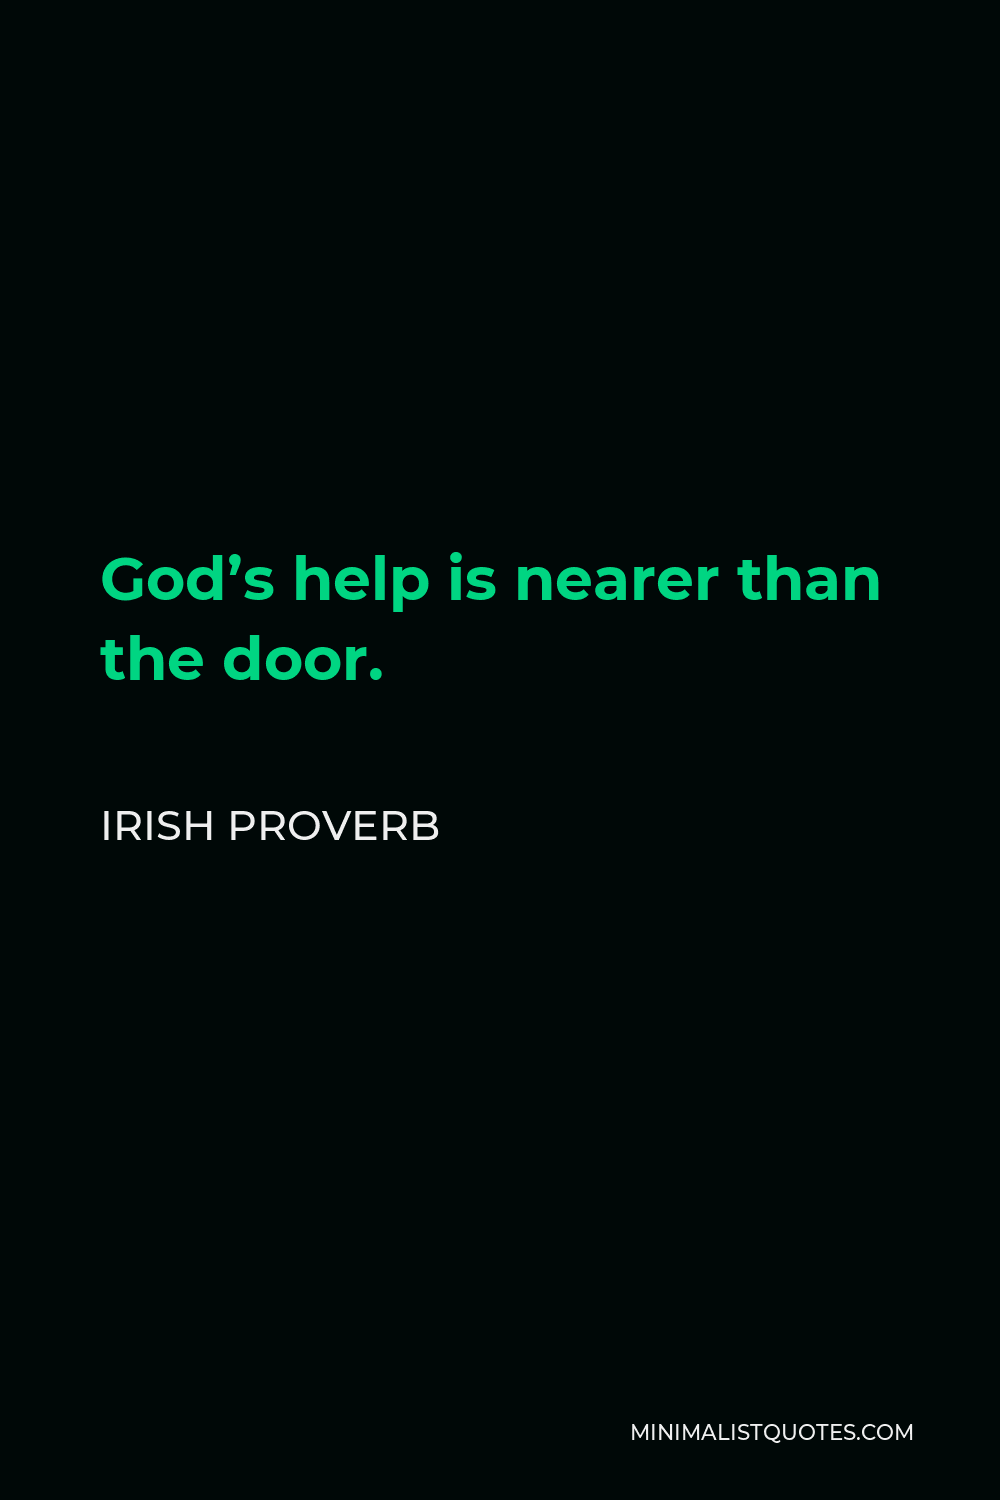 Irish Proverb Quote - God’s help is nearer than the door.